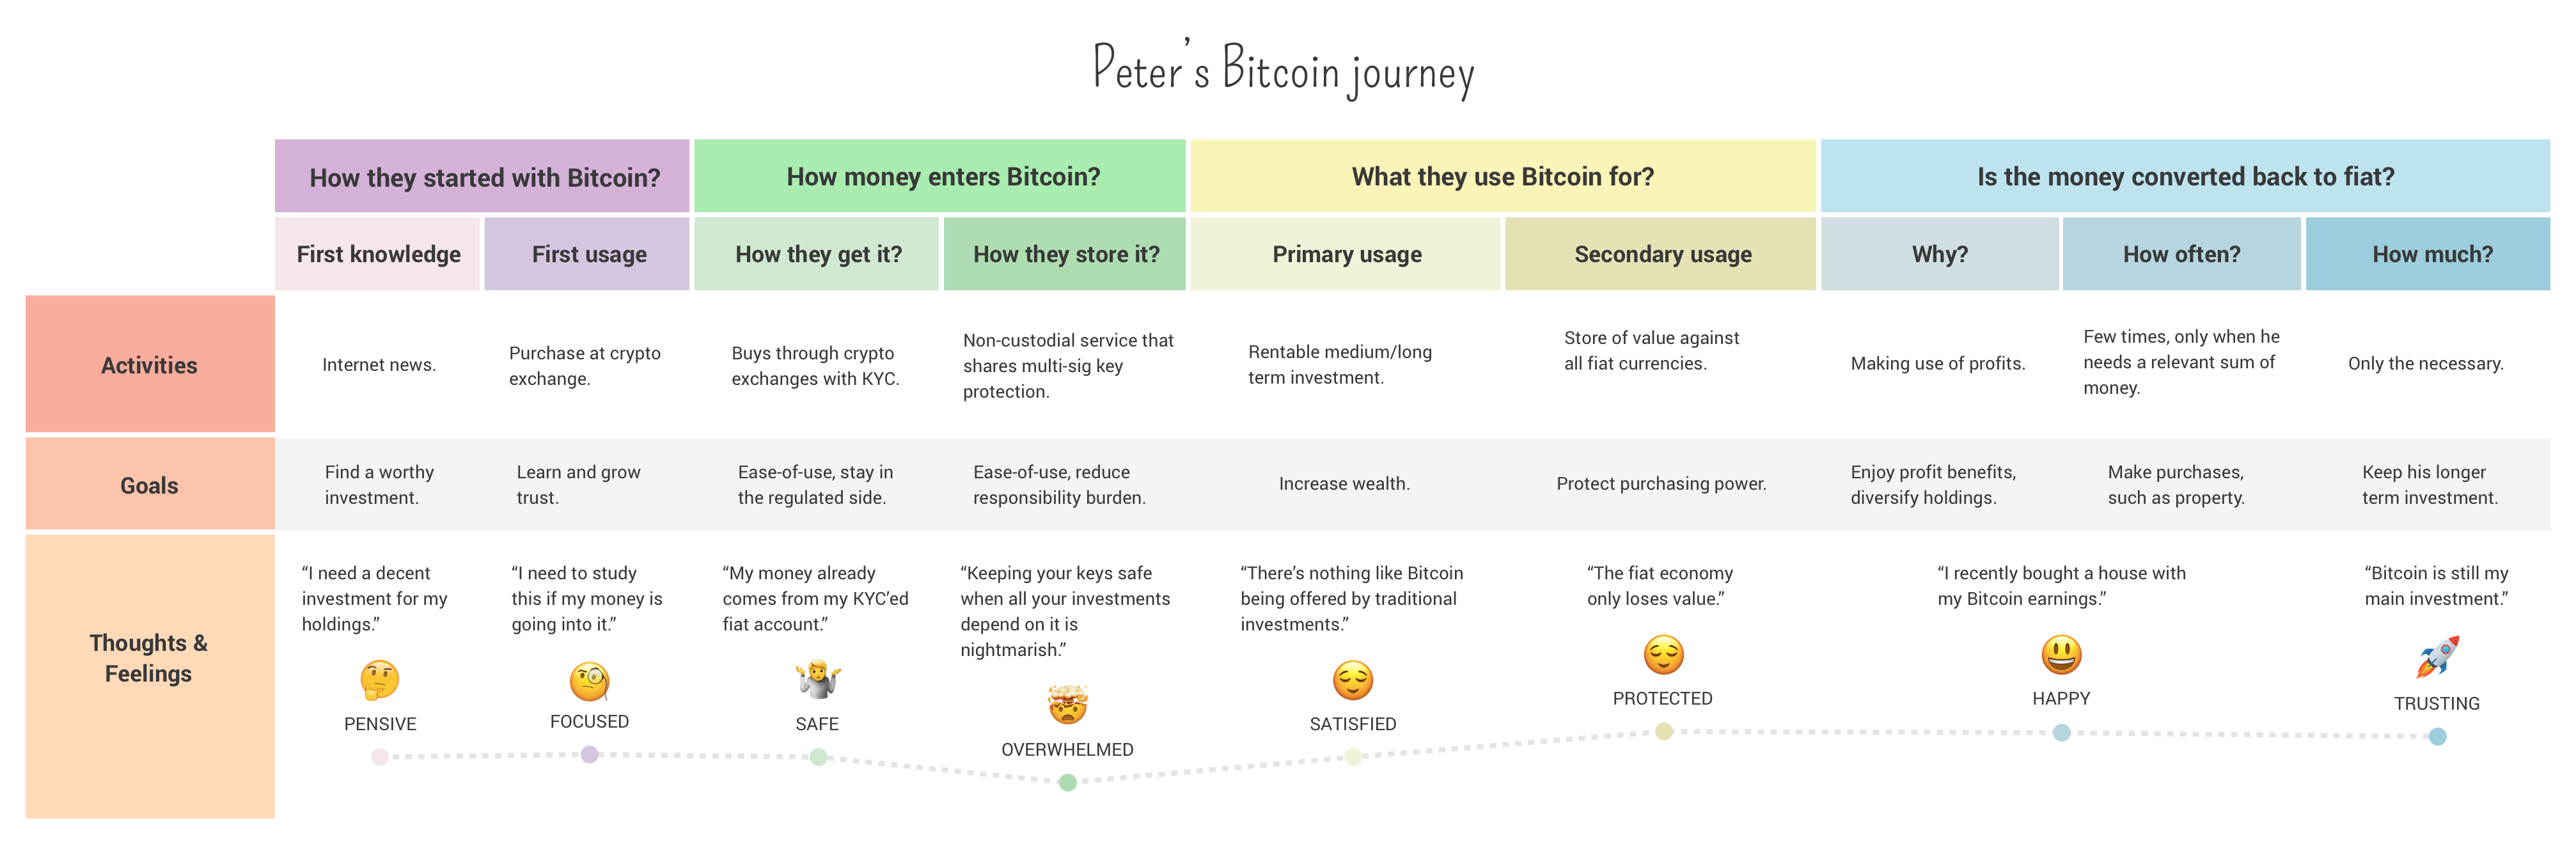 Peter’s Bitcoin journey